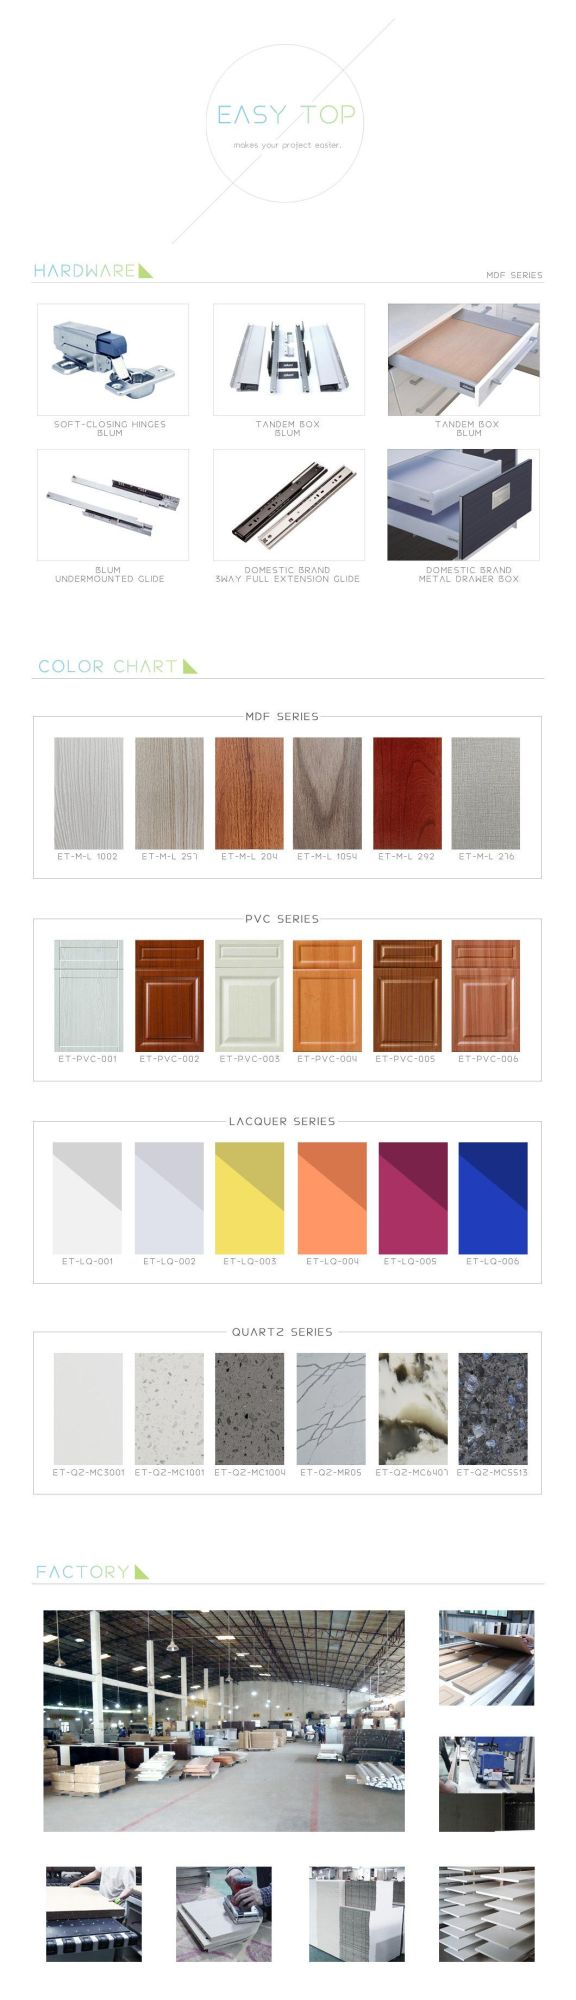 MDF Wood Veneer Door Design Home Furniture Modern Kitchen Units Cabinets